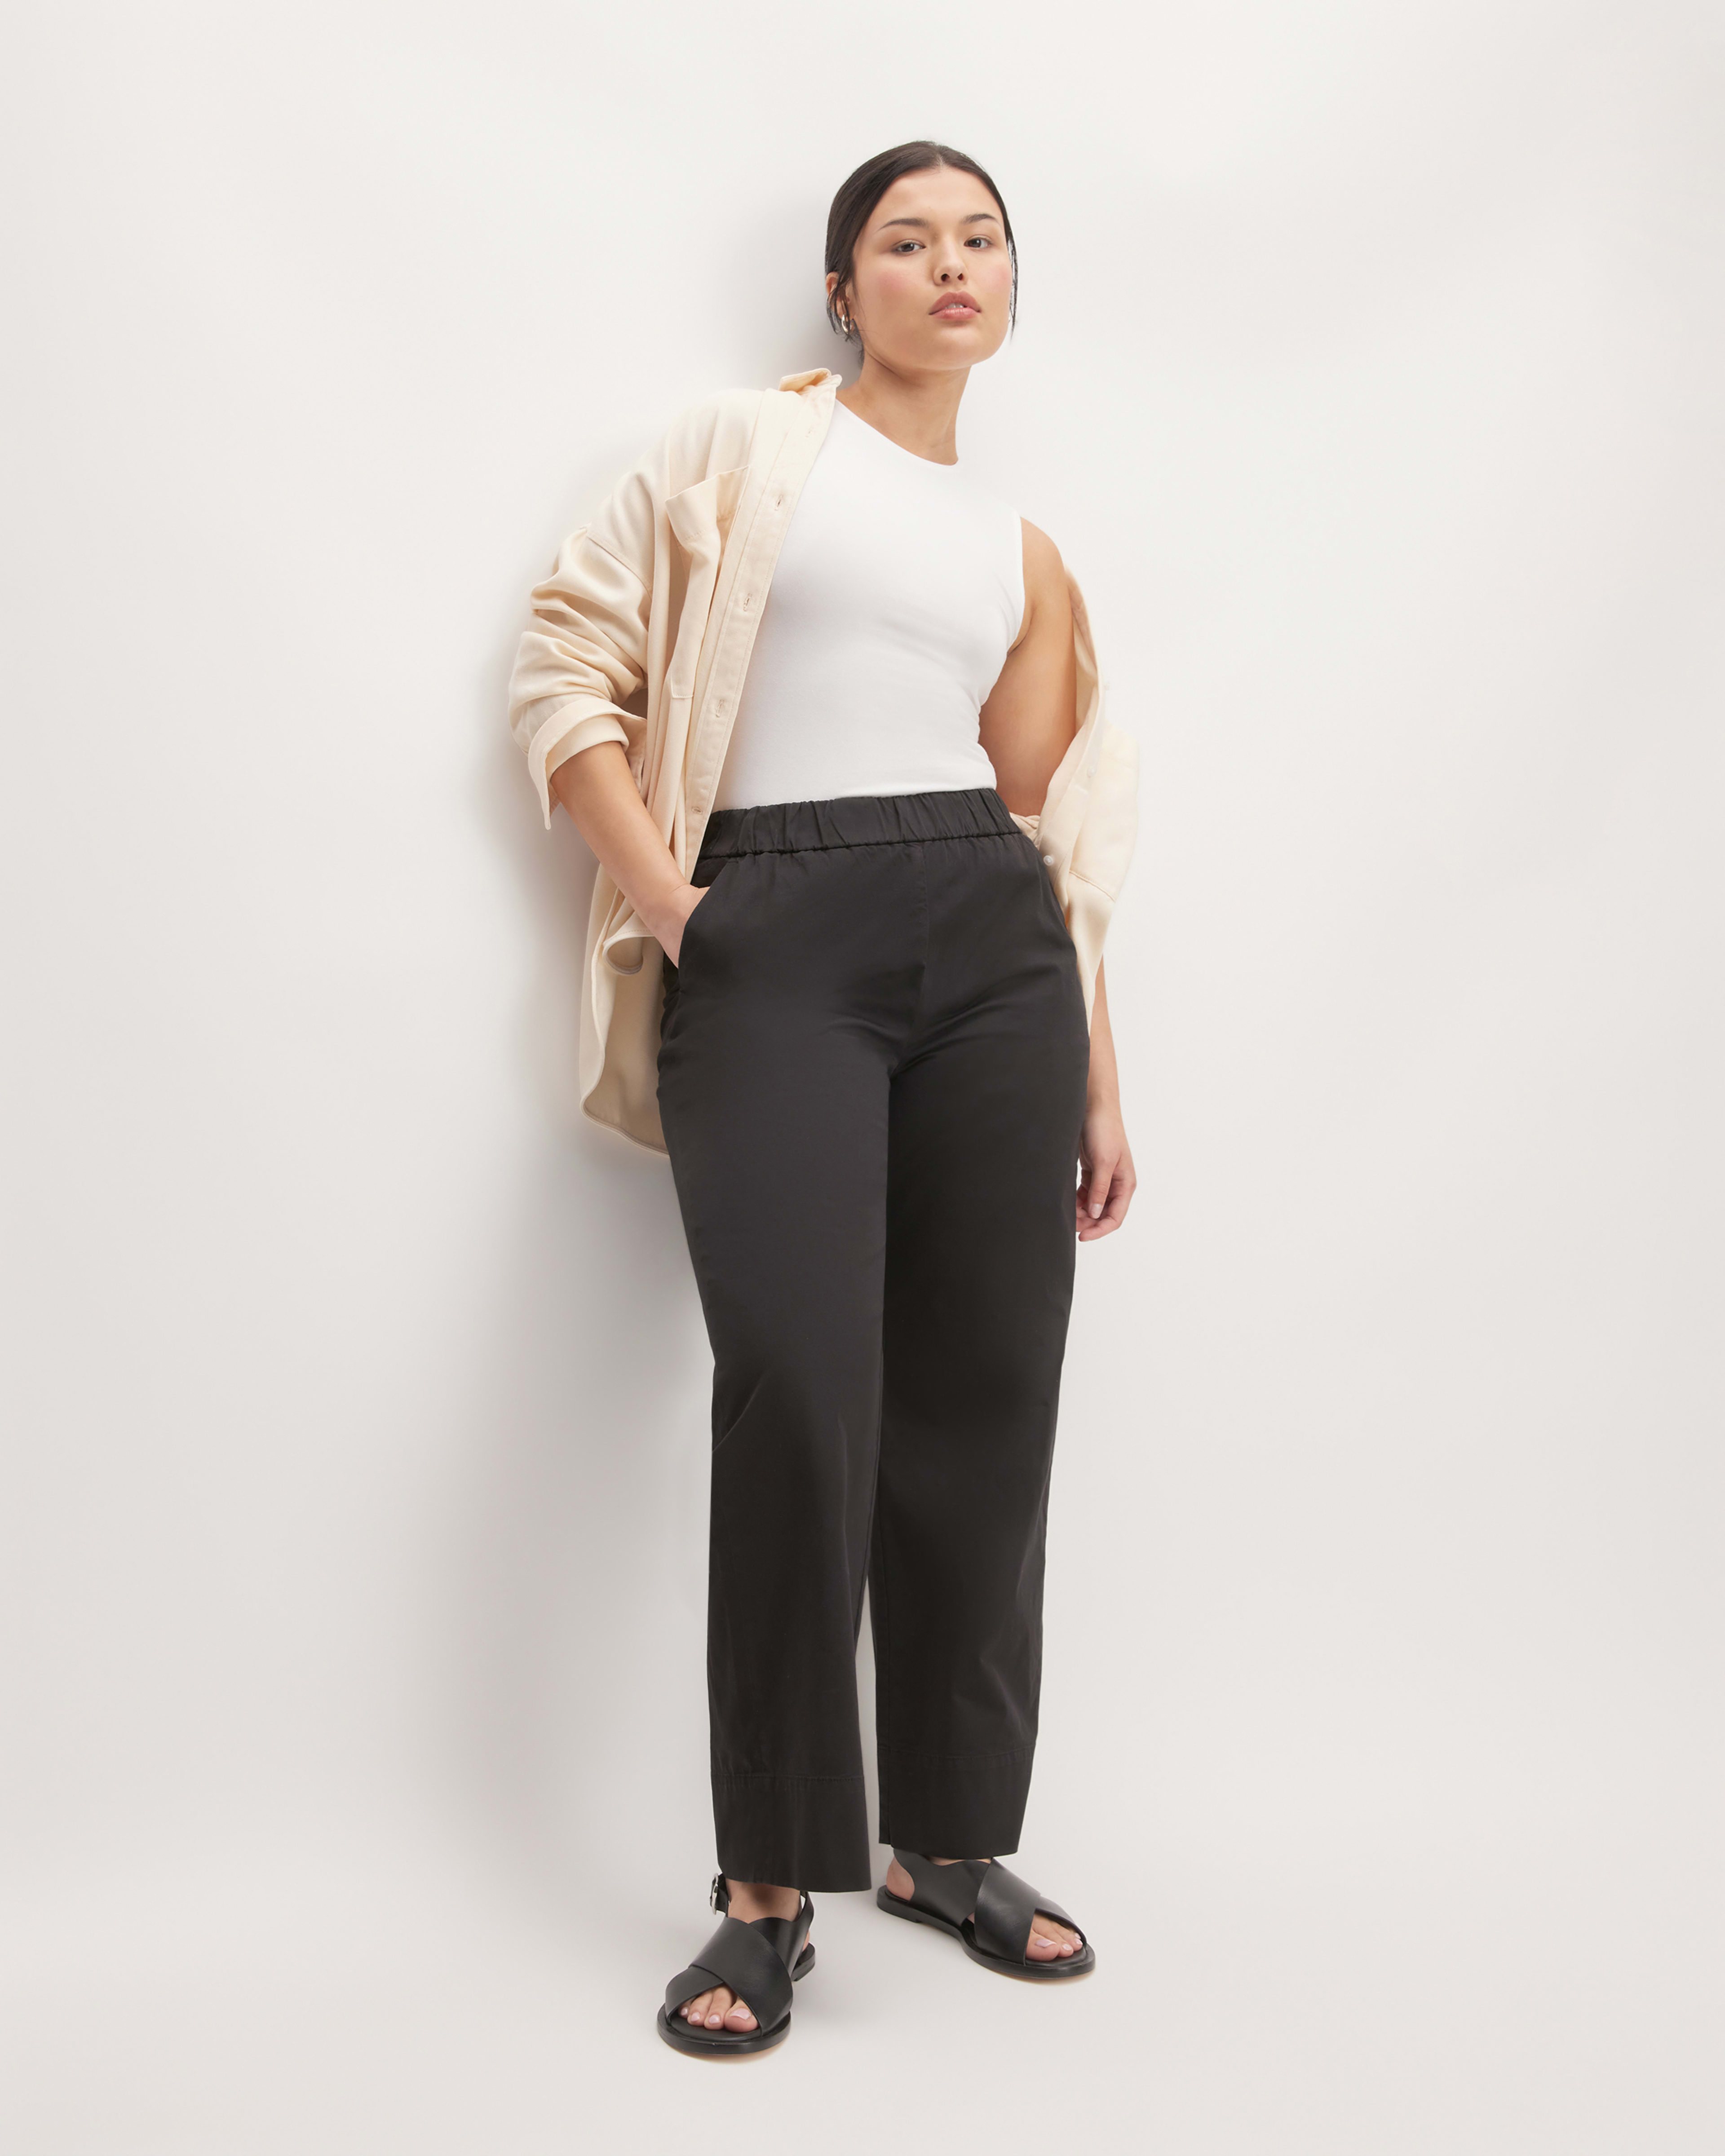 Brilliant Basics Women's Short Length Straight Work Pant - Black - Size 8